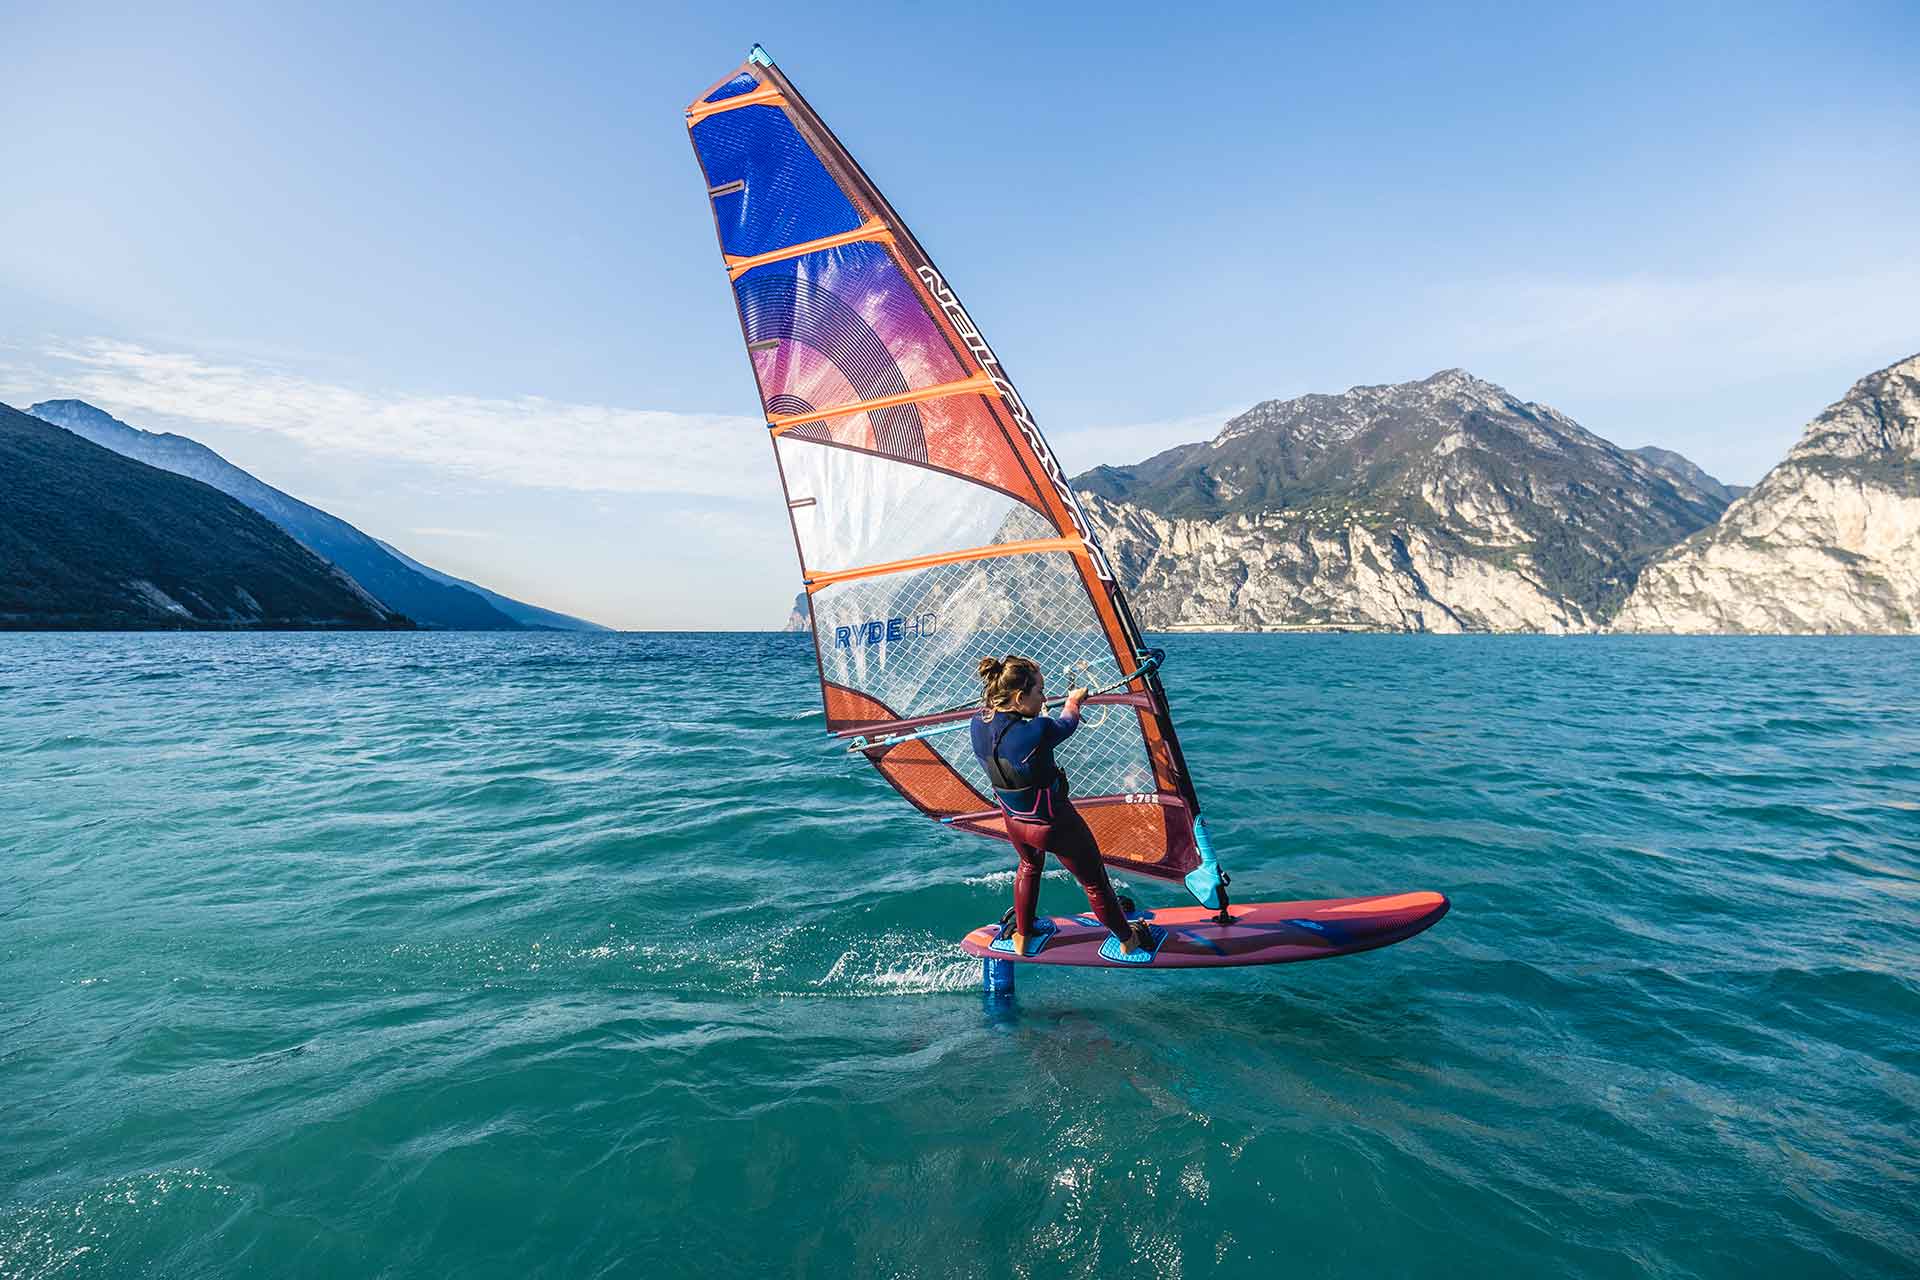 magic ride jp australie boards 2021 lxt and es windsurfing karlin foil